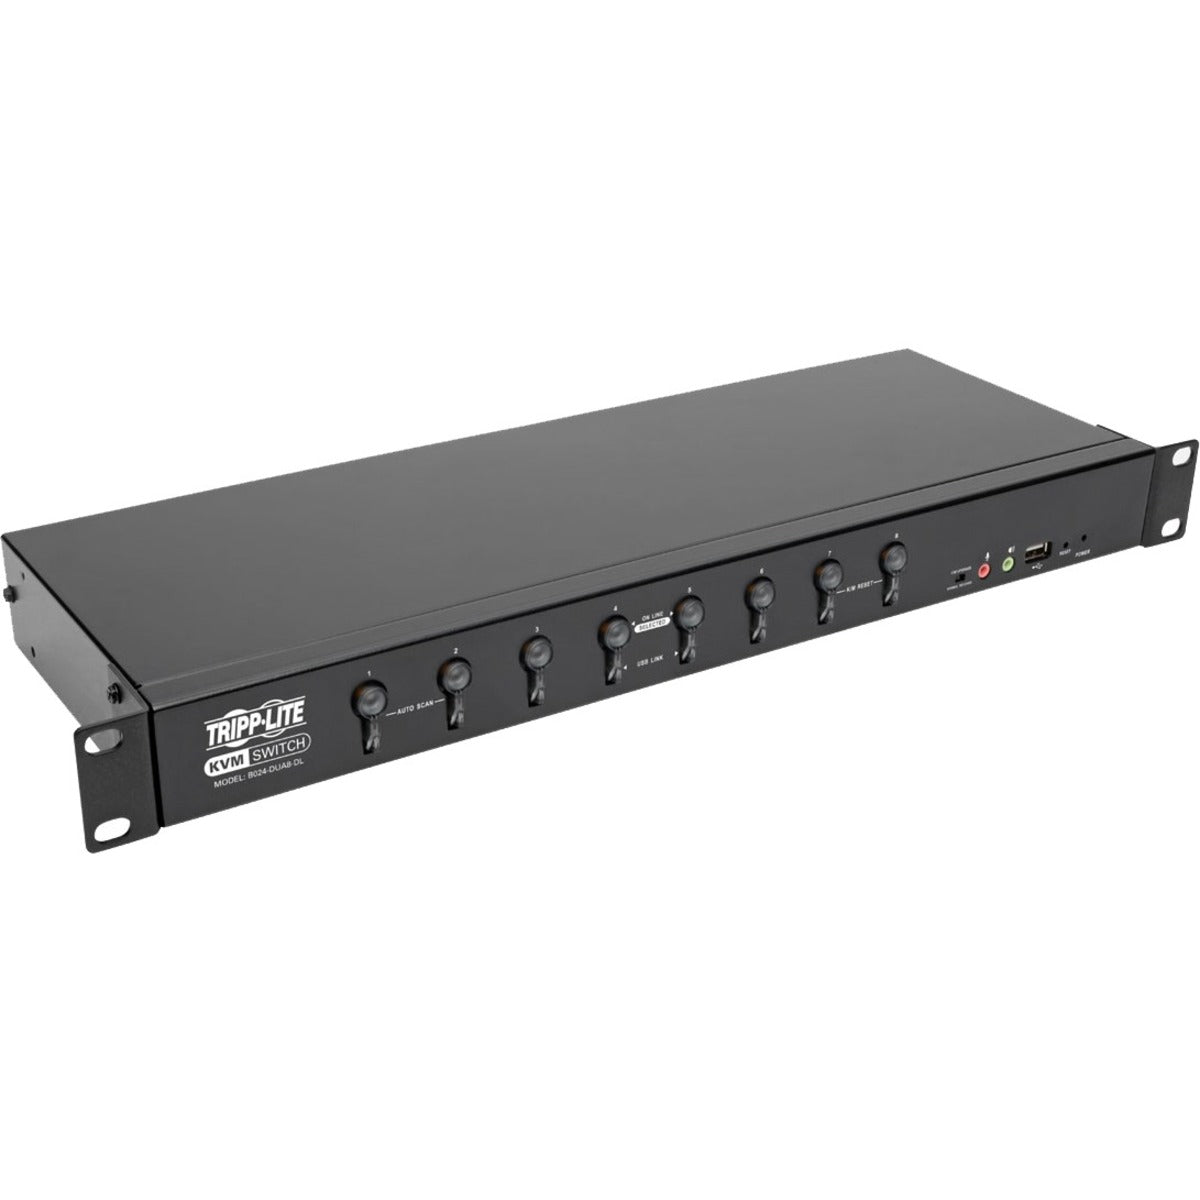 Tripp Lite B024-DUA8-DL DVI/USB 8-Port KVM Switch, 2560 x 1600 Resolution, 3 Year Warranty, TAA Compliant